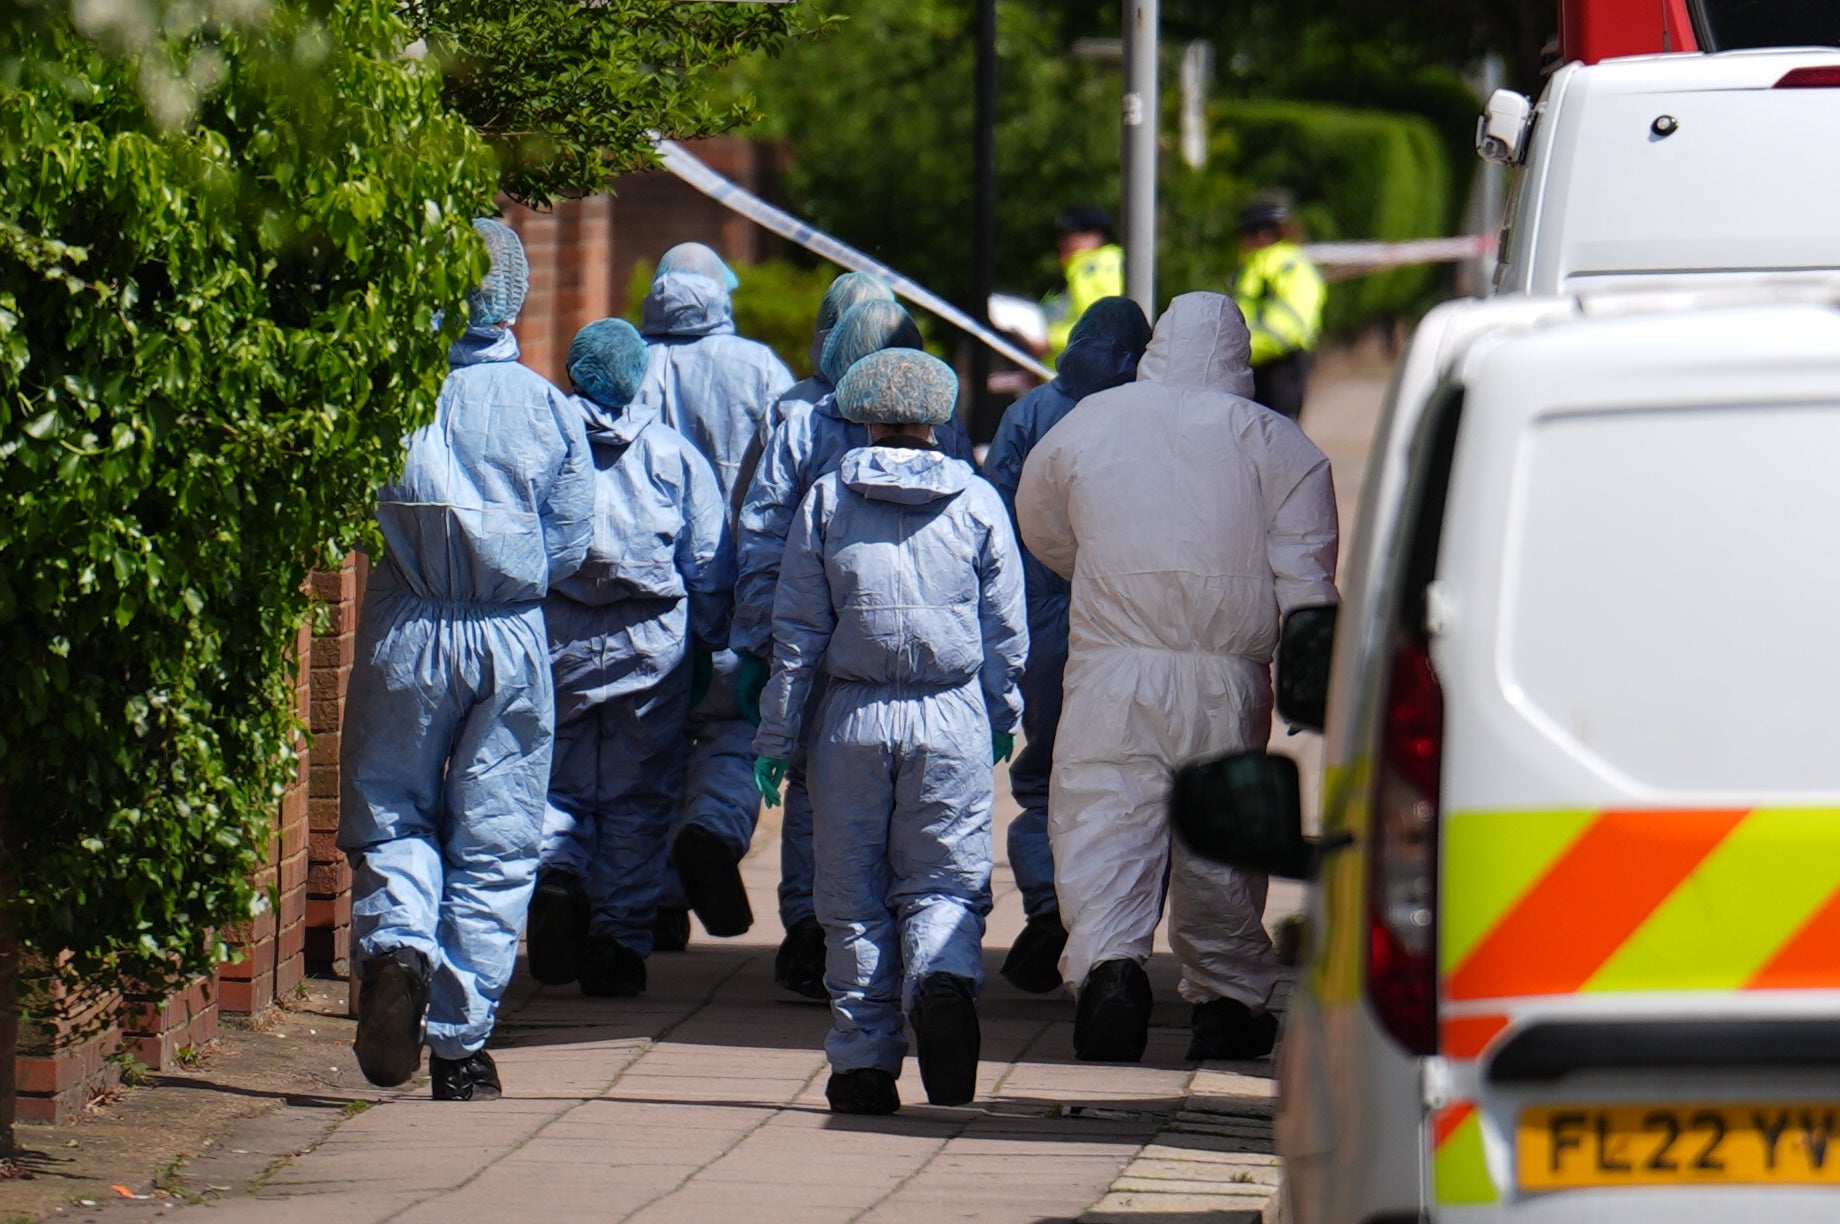 Forensic investigators at the scene in northeast London